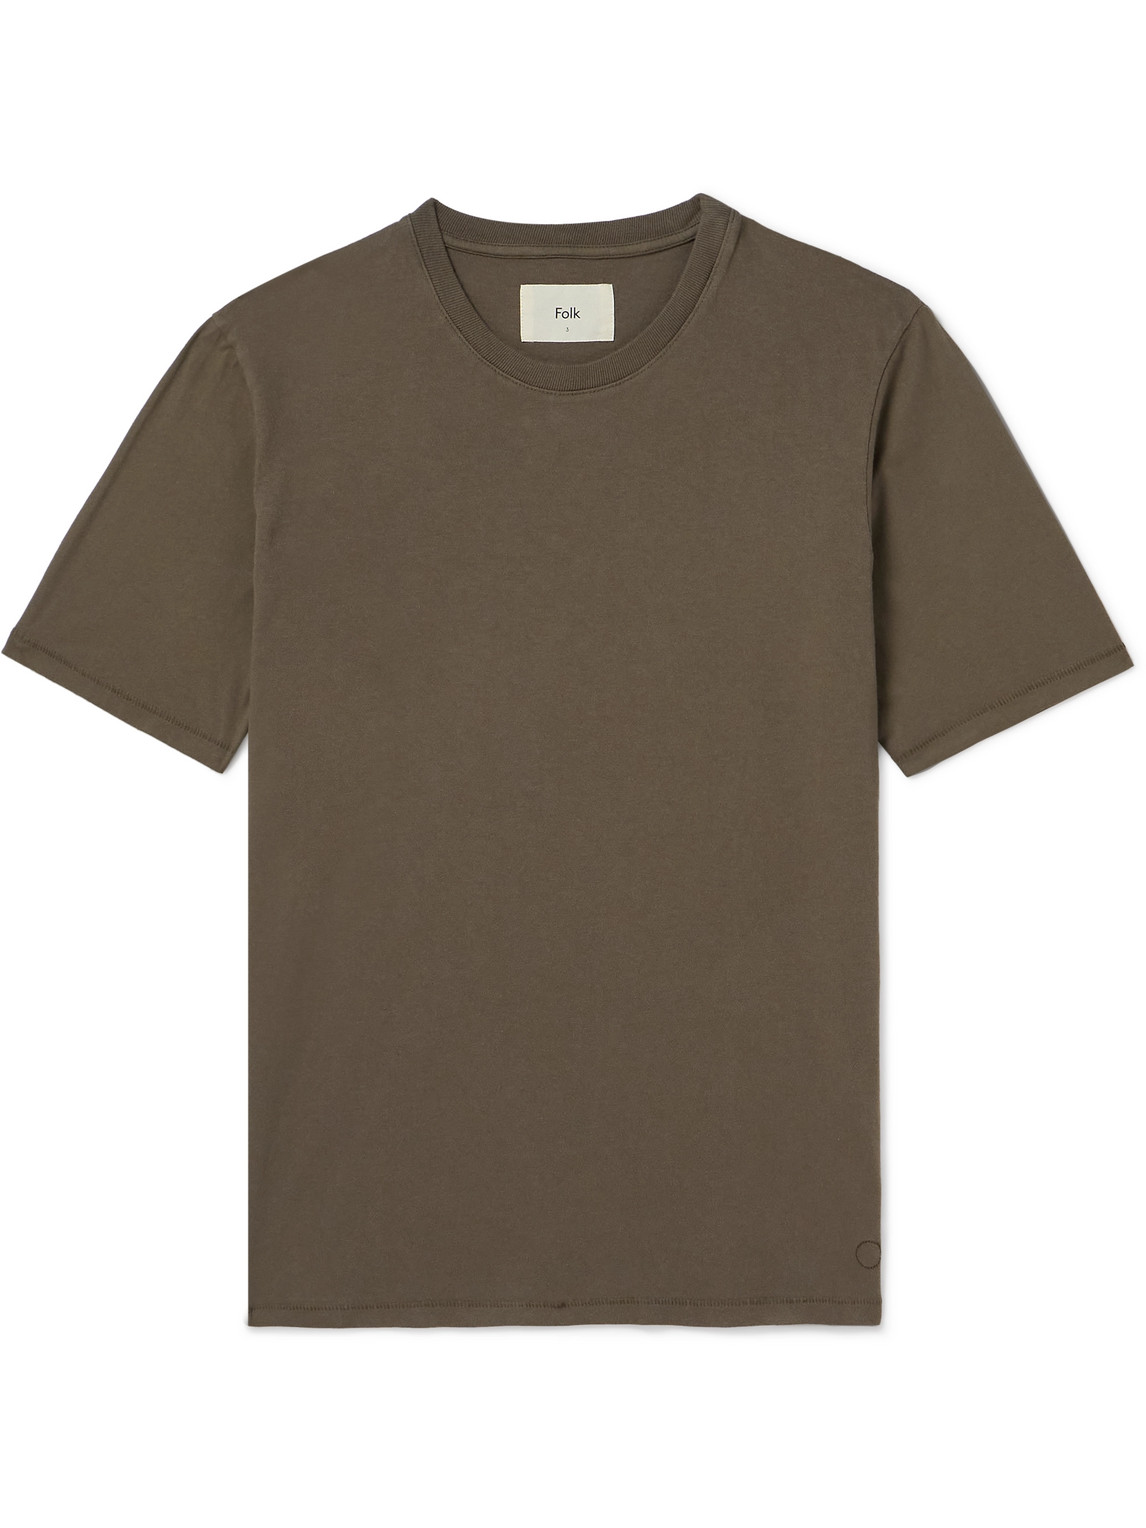 Folk Garment-dyed Cotton-jersey T-shirt In Brown